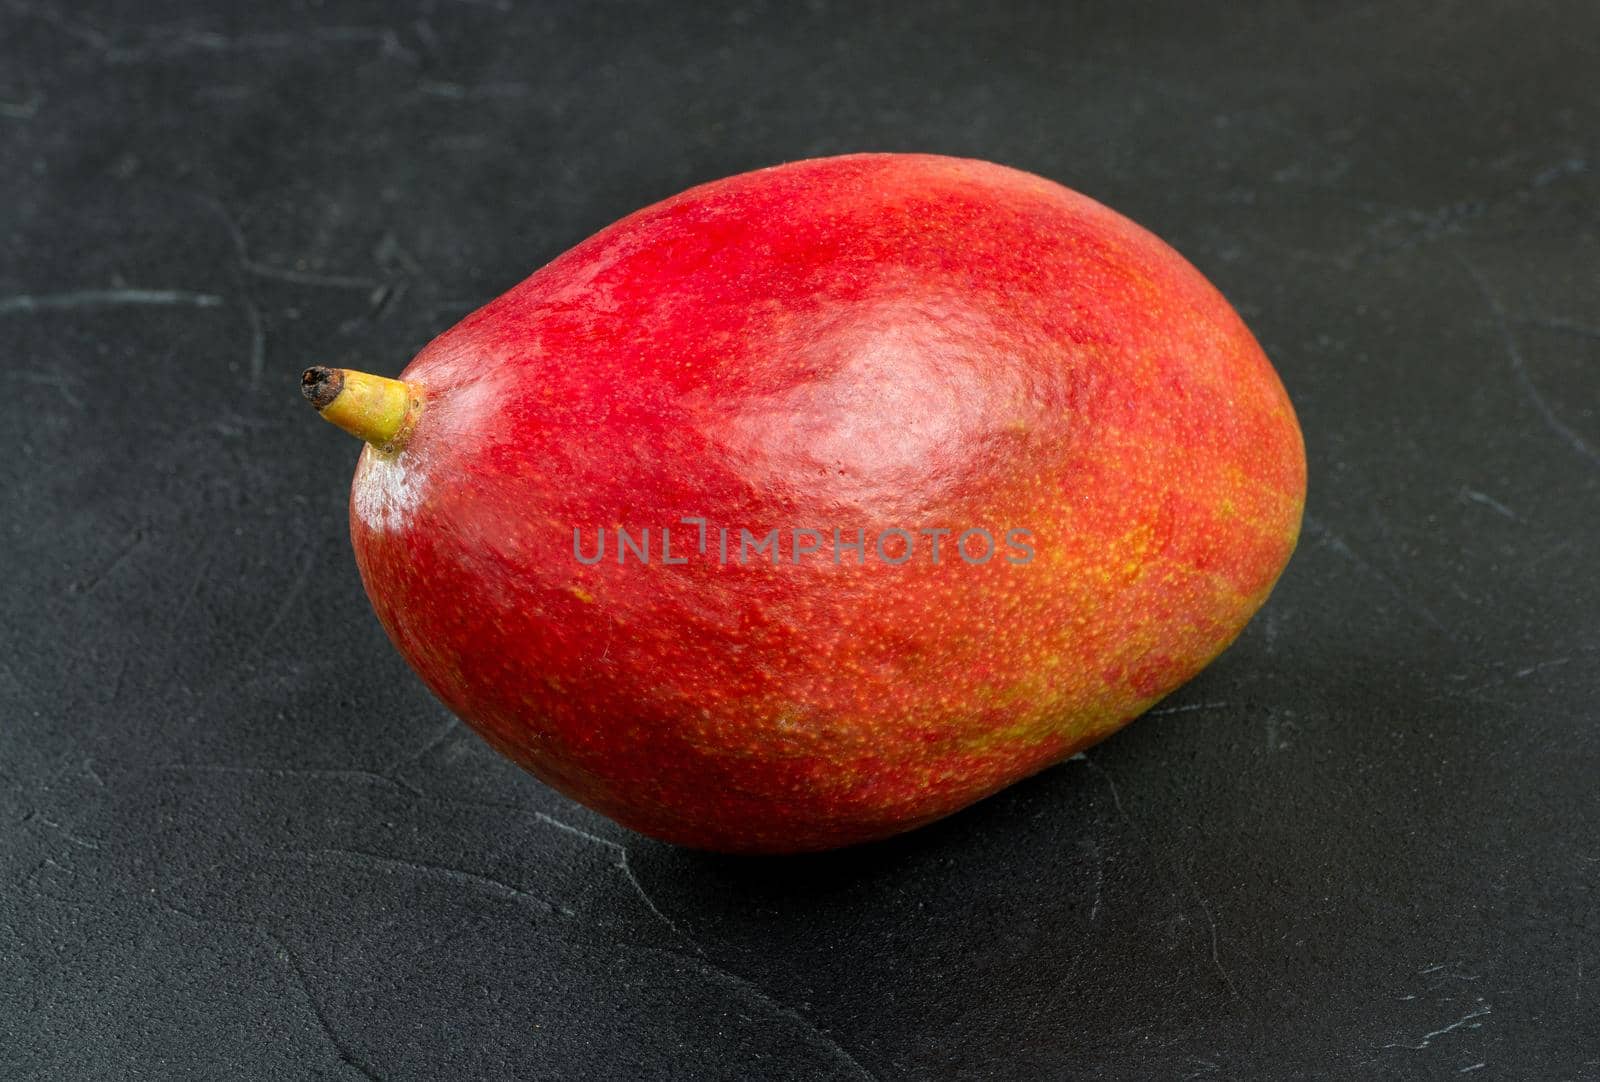 Red ripe mango fruit on a dark background